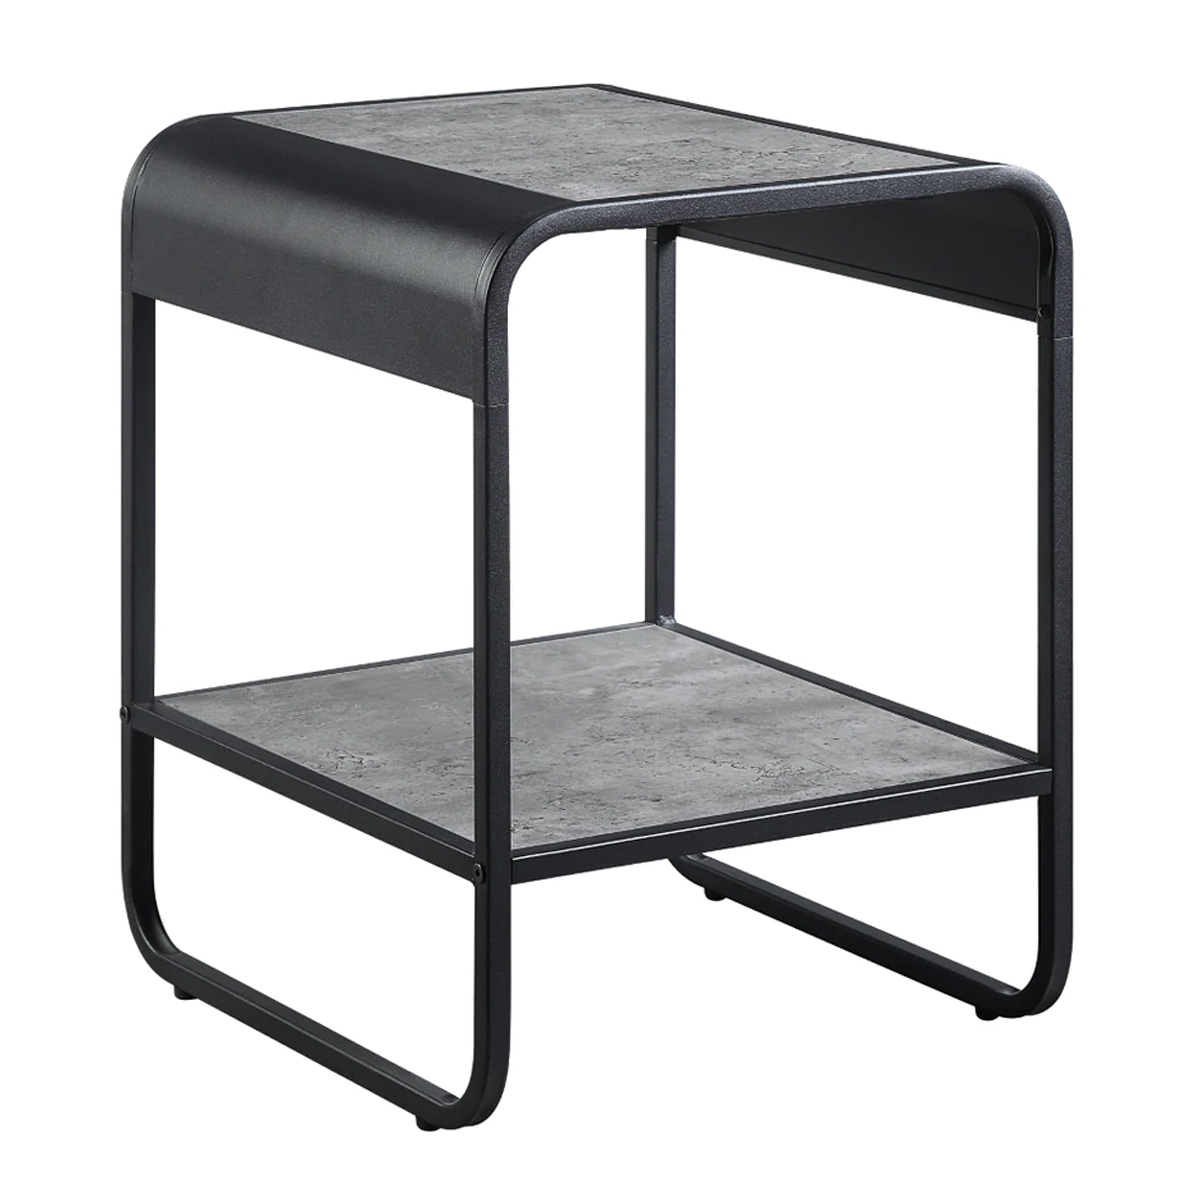 Ish 21 Inch Modern End Table With Open Shelves, Wood, Gray, Black- Saltoro Sherpi